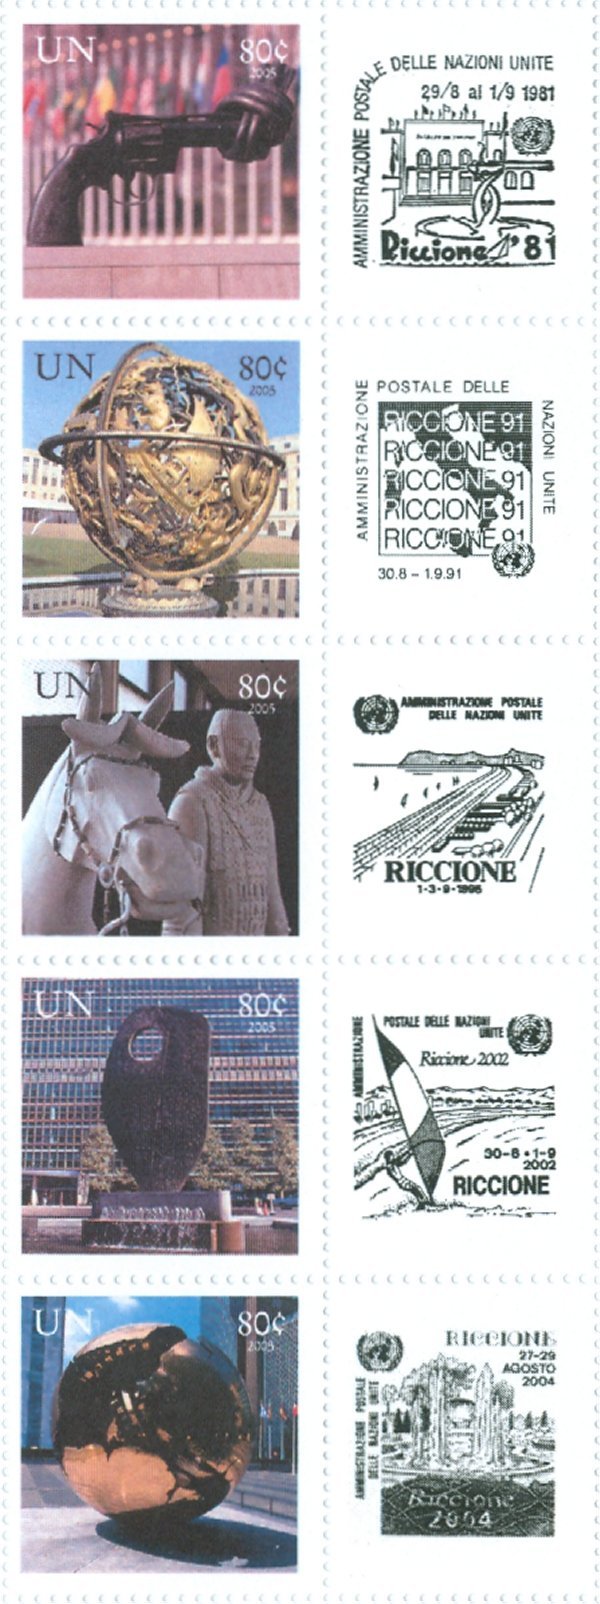 UNNY 880-84r 80c Personalized Riccione Sheet #ny880rsh